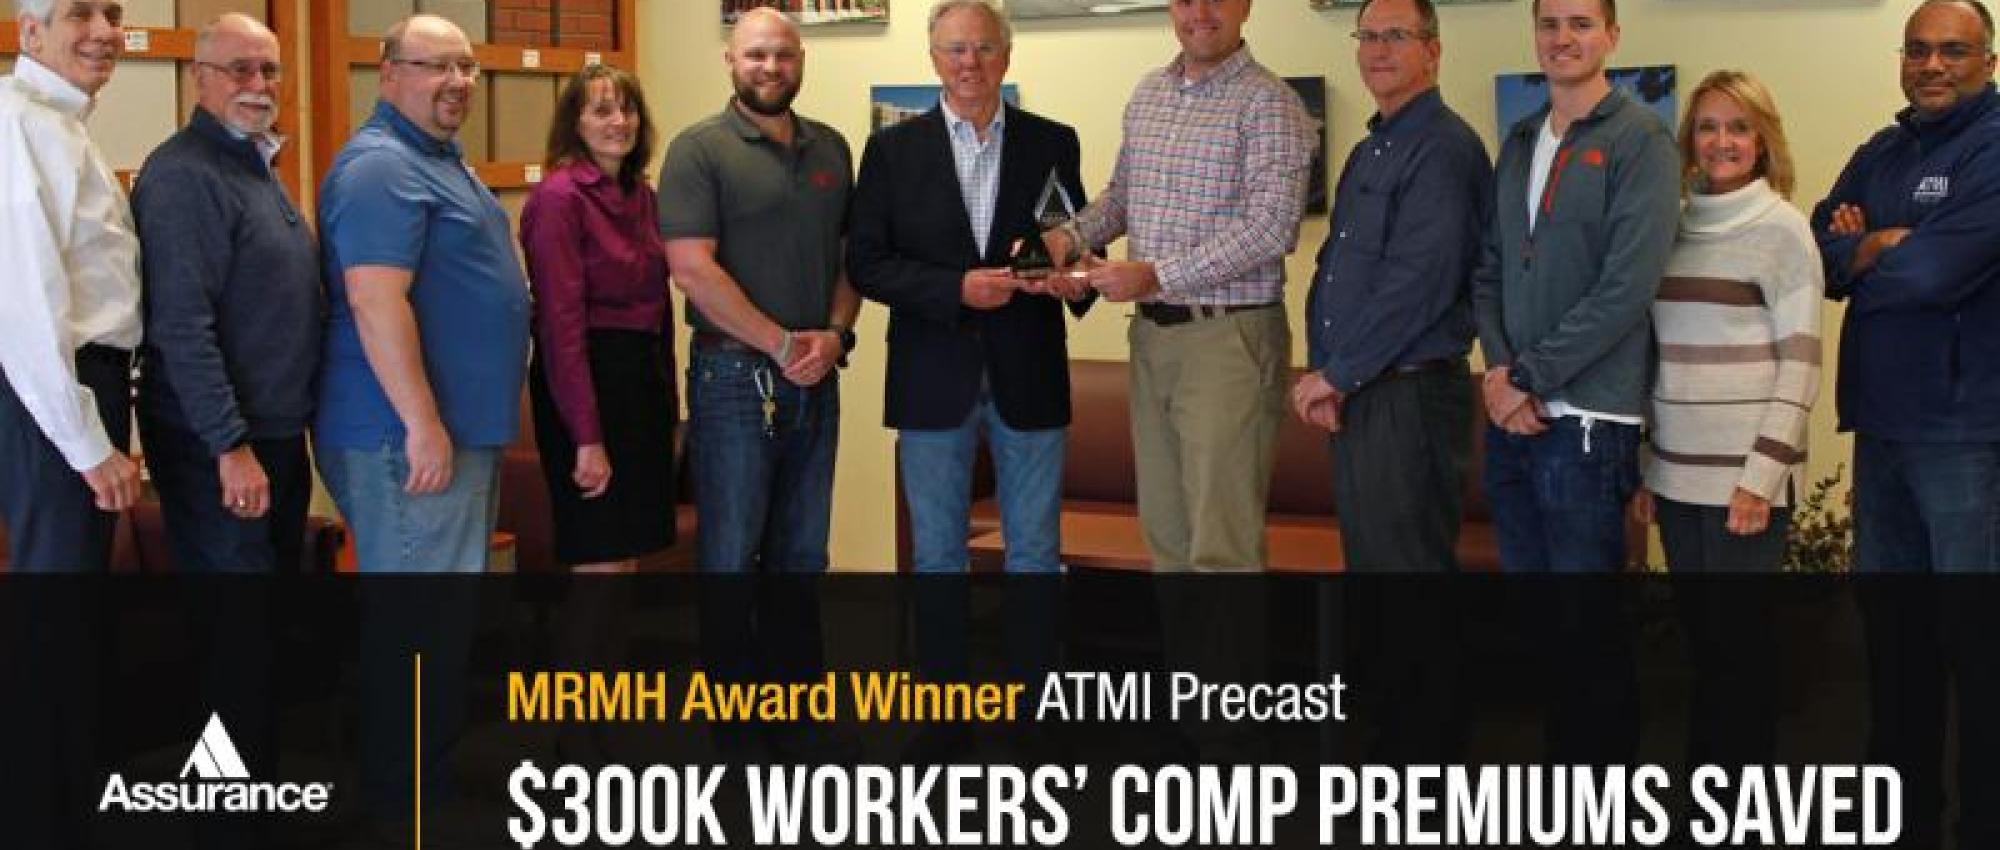 Assurance awards ATMI with MRMH Award